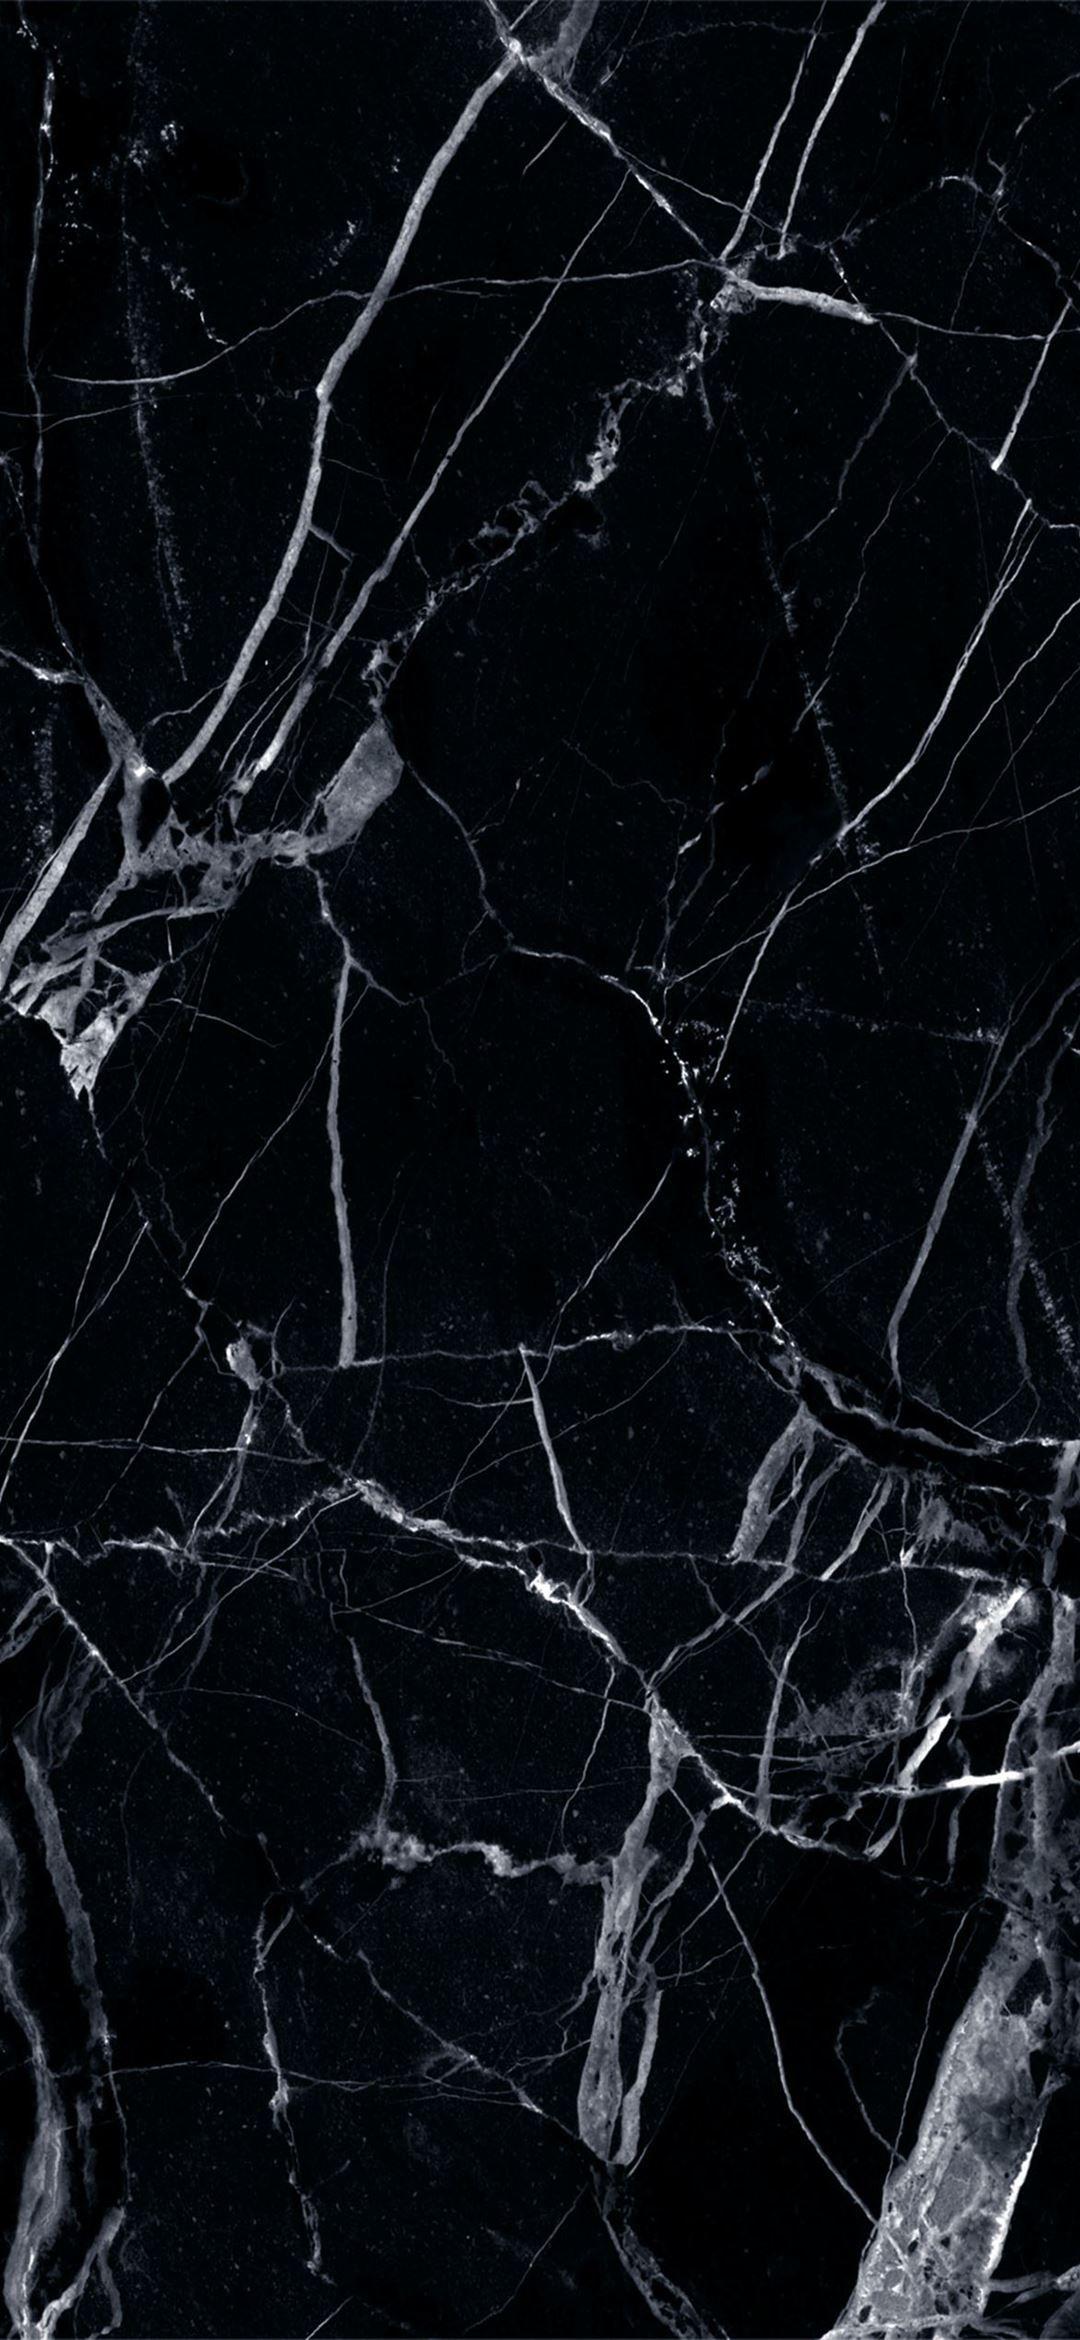 Broken glass shattered black background Wallpaper ID3271